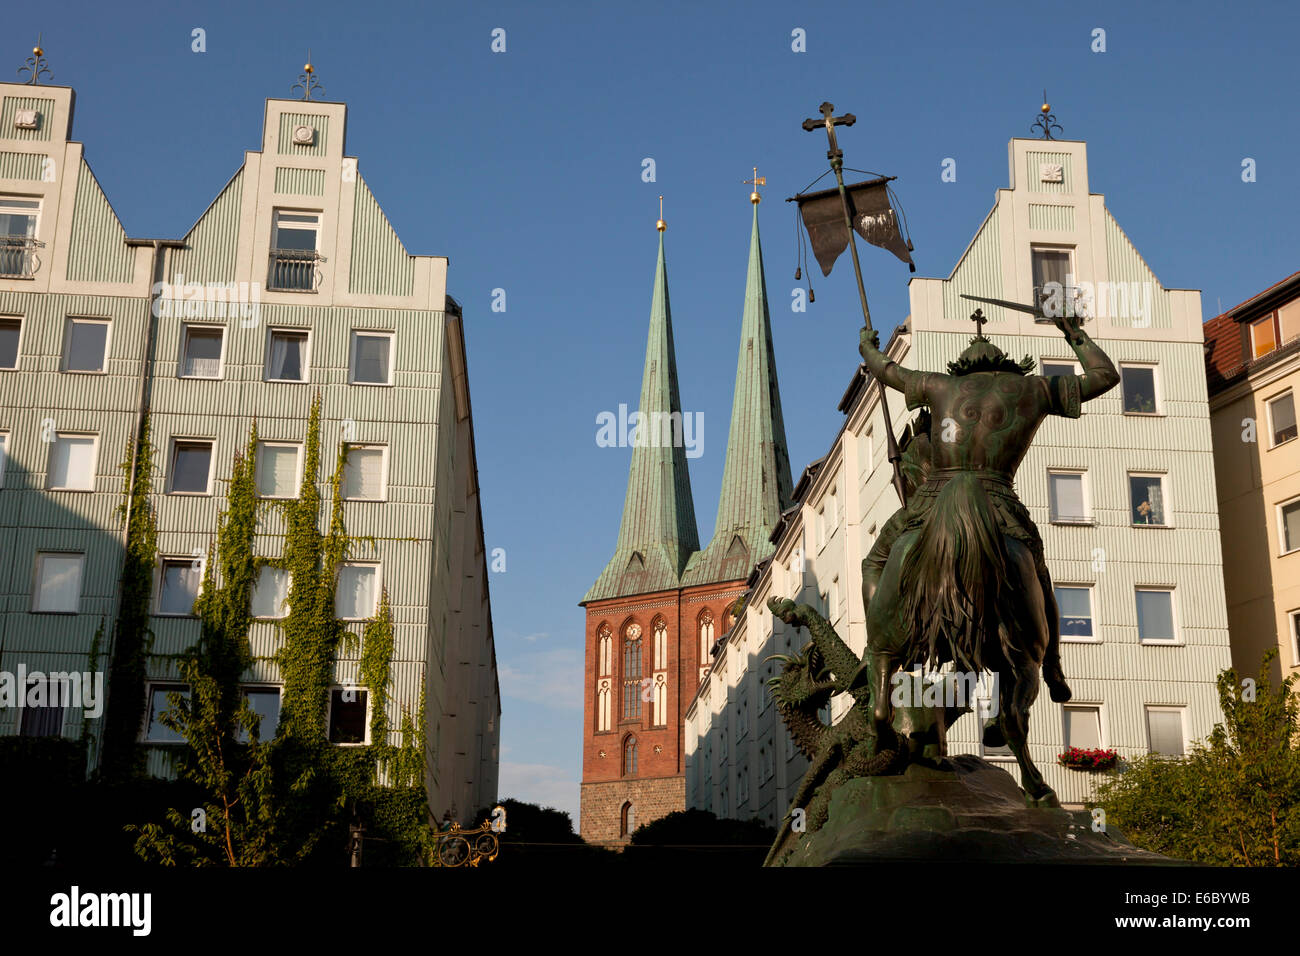 St George the dragon-slayer and Nicholas' Church,  Nikolaiviertel or Nicholas' Quarter in Berlin, Germany, Europe Stock Photo